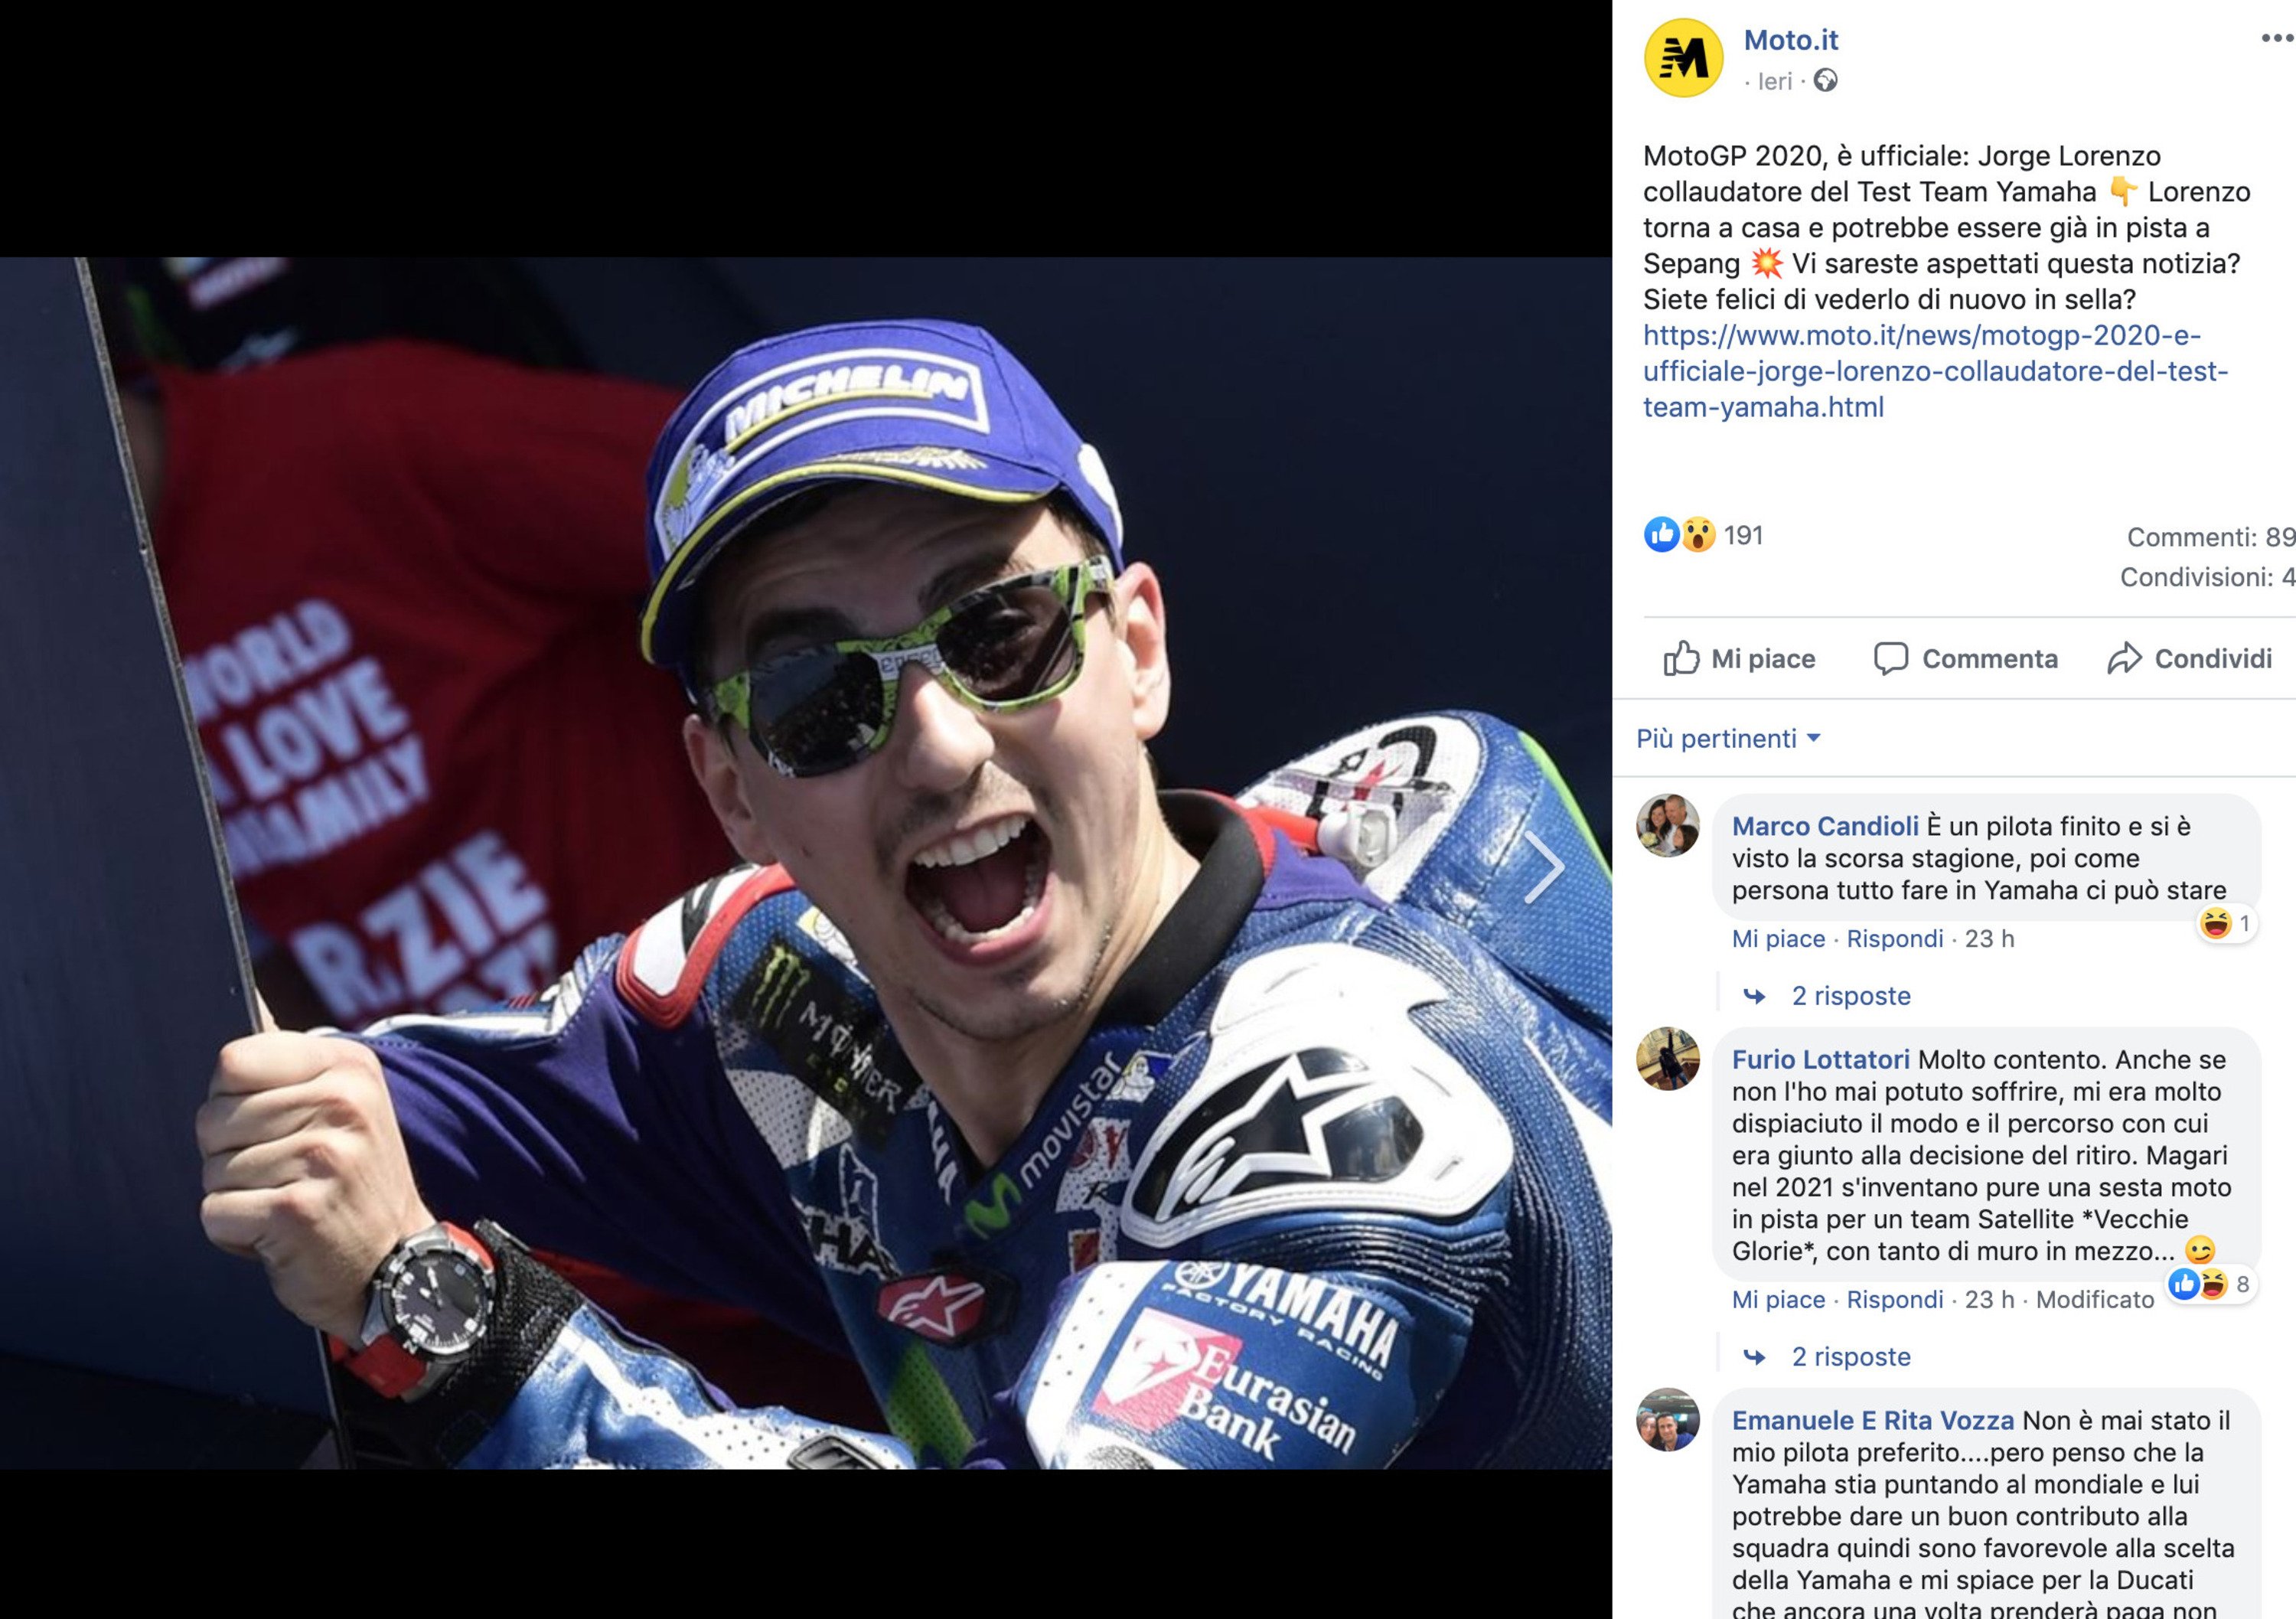 MotoGP. Lorenzo tester Yamaha. Giusto o sbagliato... secondo voi